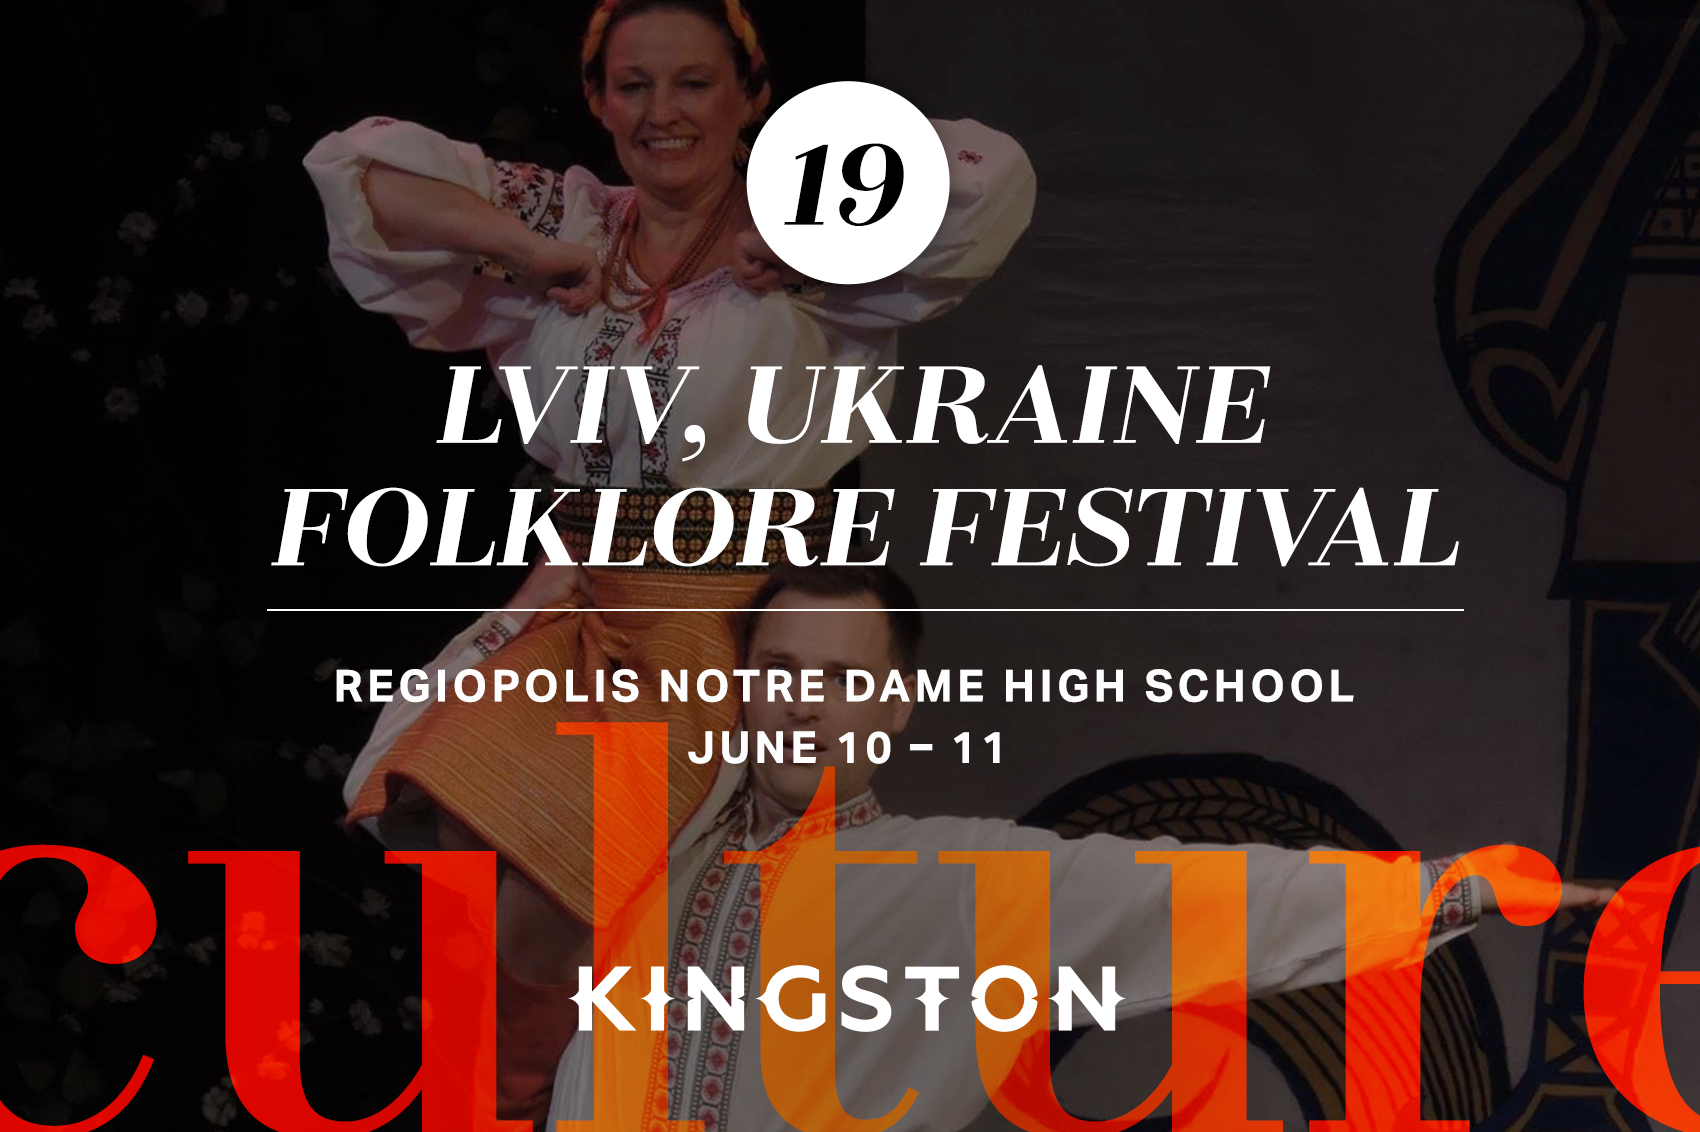 Lviv, Ukraine Folklore Festival